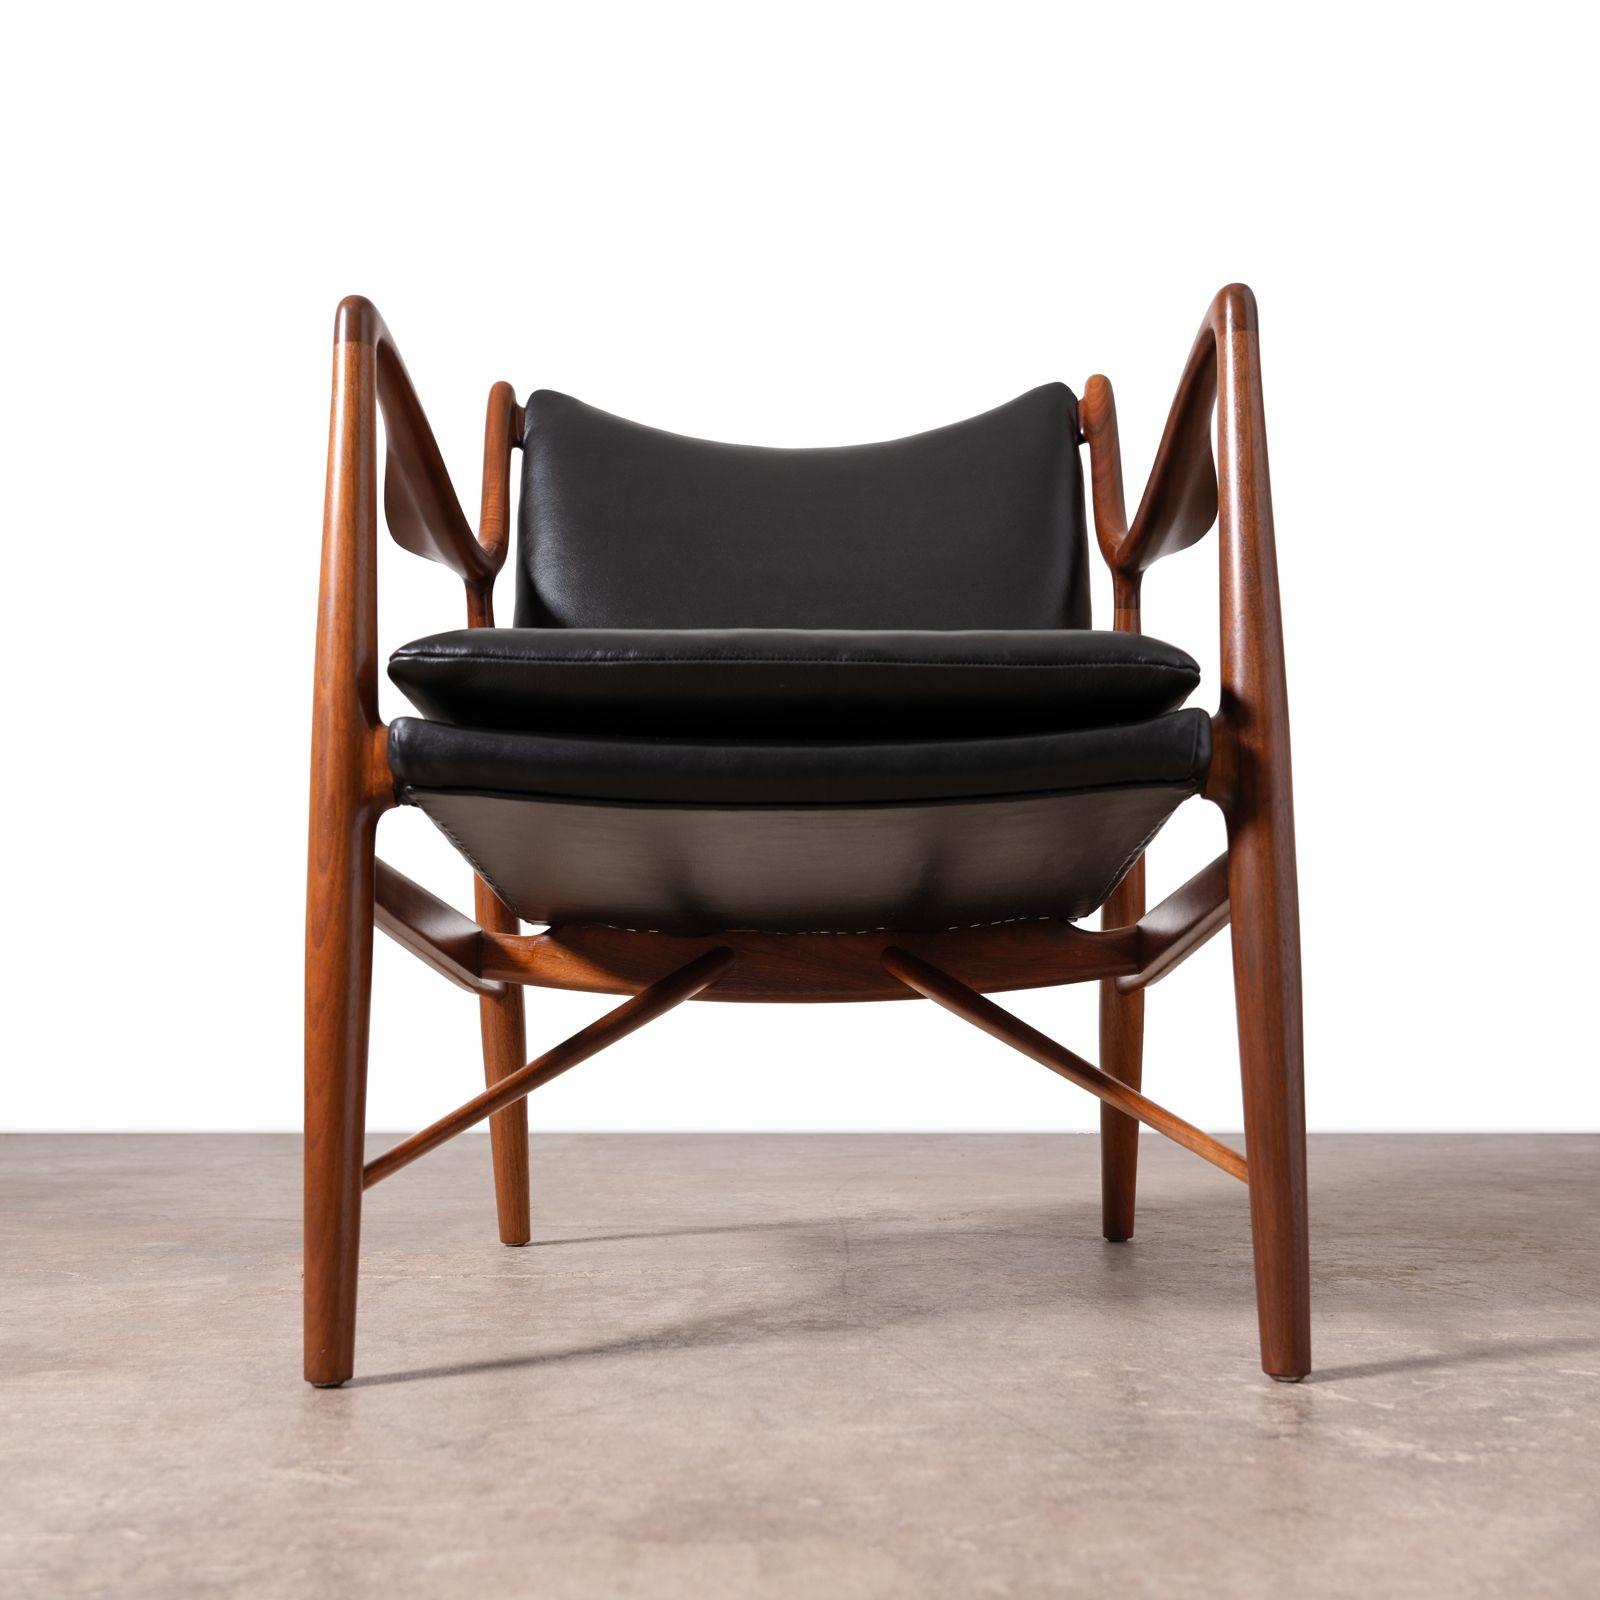 Finn Juhl NV-45 Scandinavian Lounge Chairs in Walnut and Black Leather 1950s For Sale 9